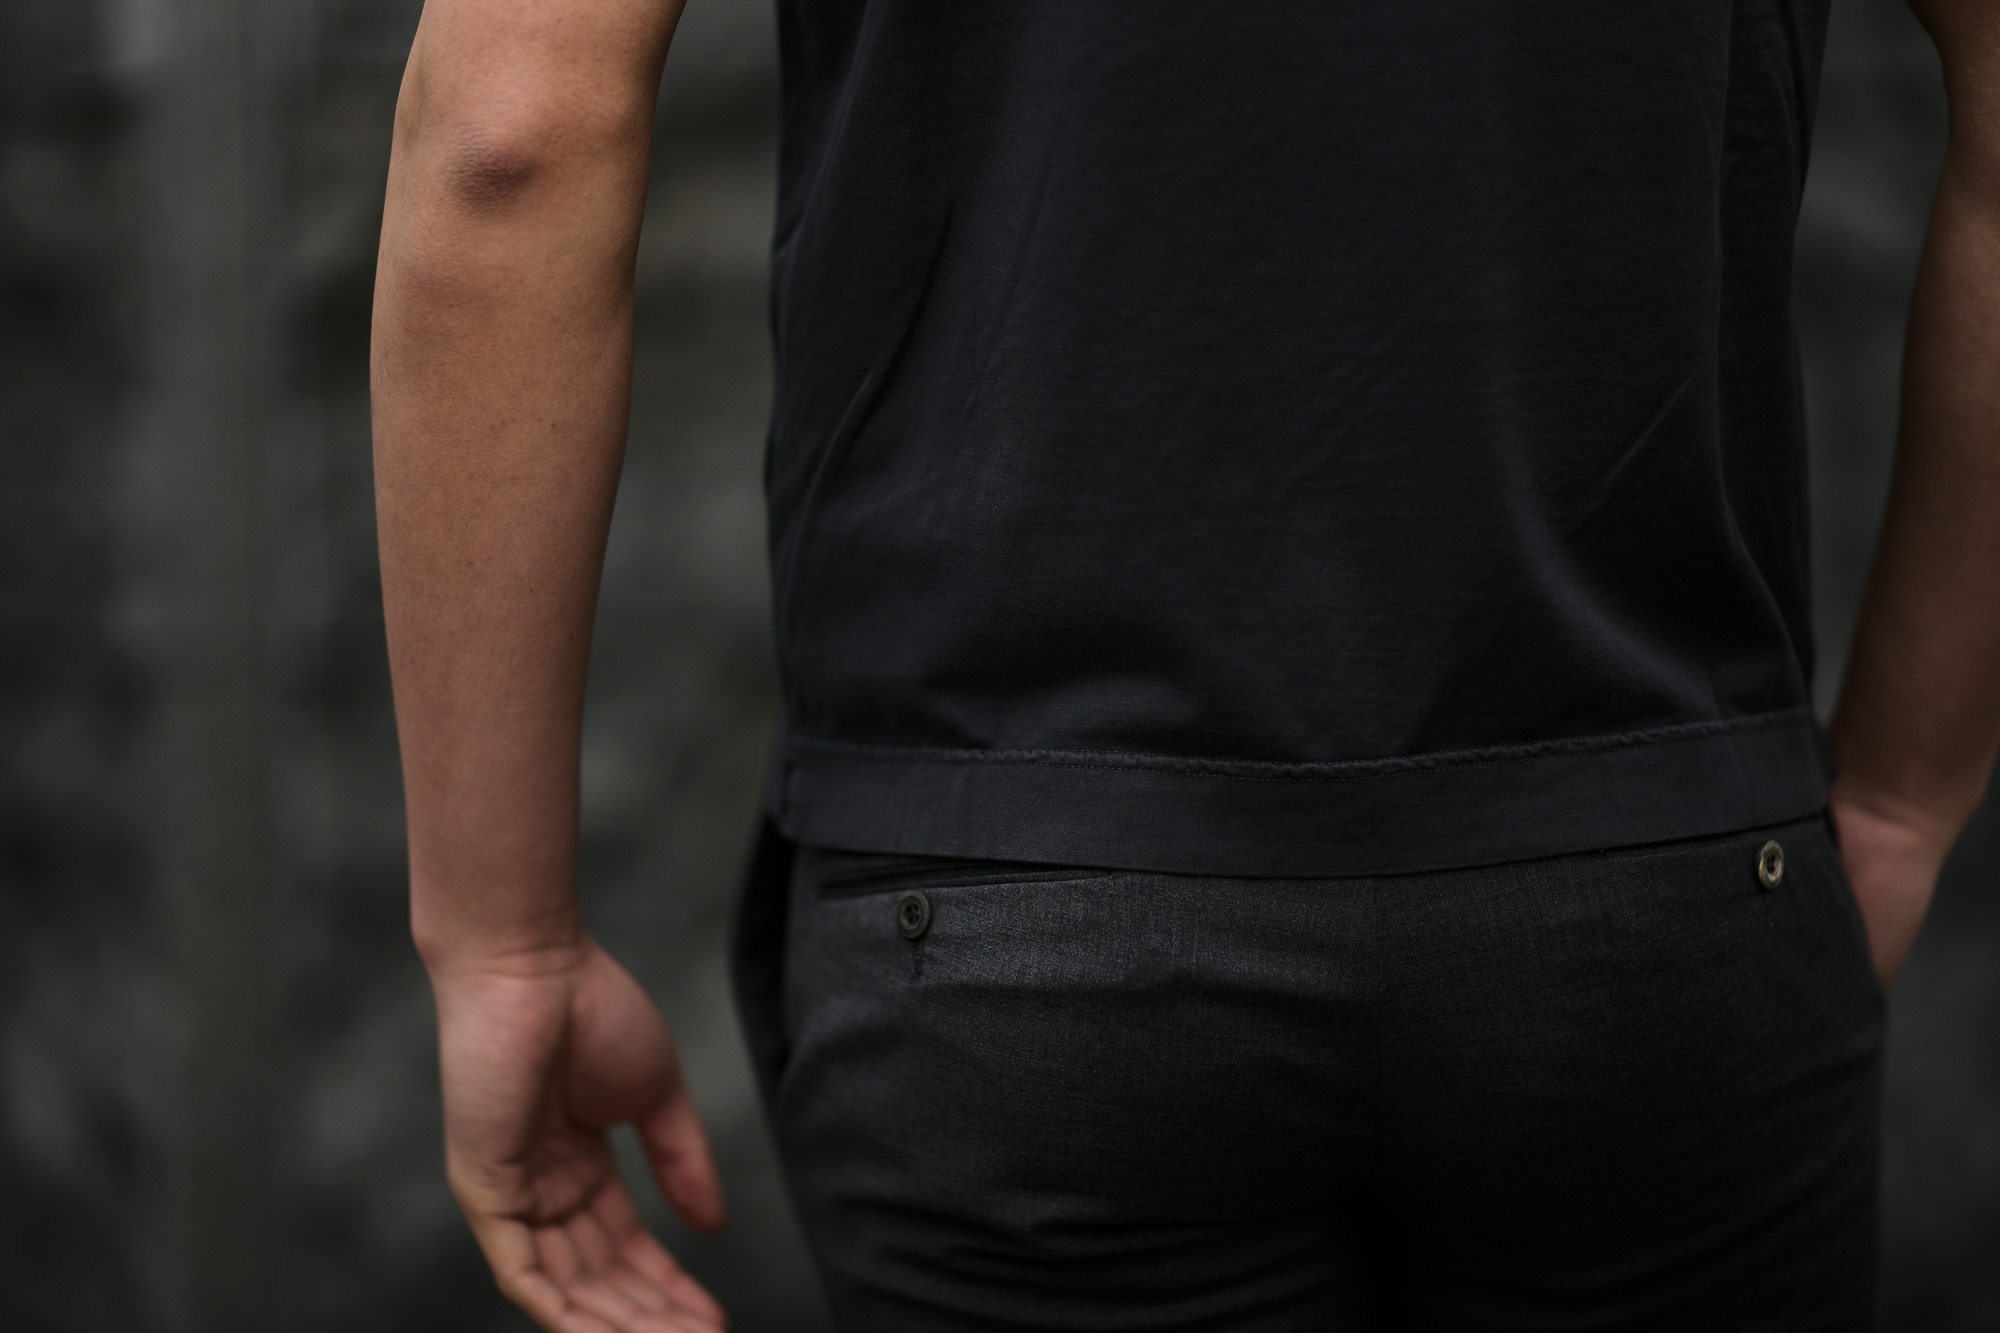 FEDELI (フェデーリ) Crew Neck T-shirt (クルーネック Tシャツ) ギザコットン Tシャツ BLACK (ブラック・36) made in italy (イタリア製) 2019 春夏新作 愛知 名古屋　altoediritto アルトエデリット